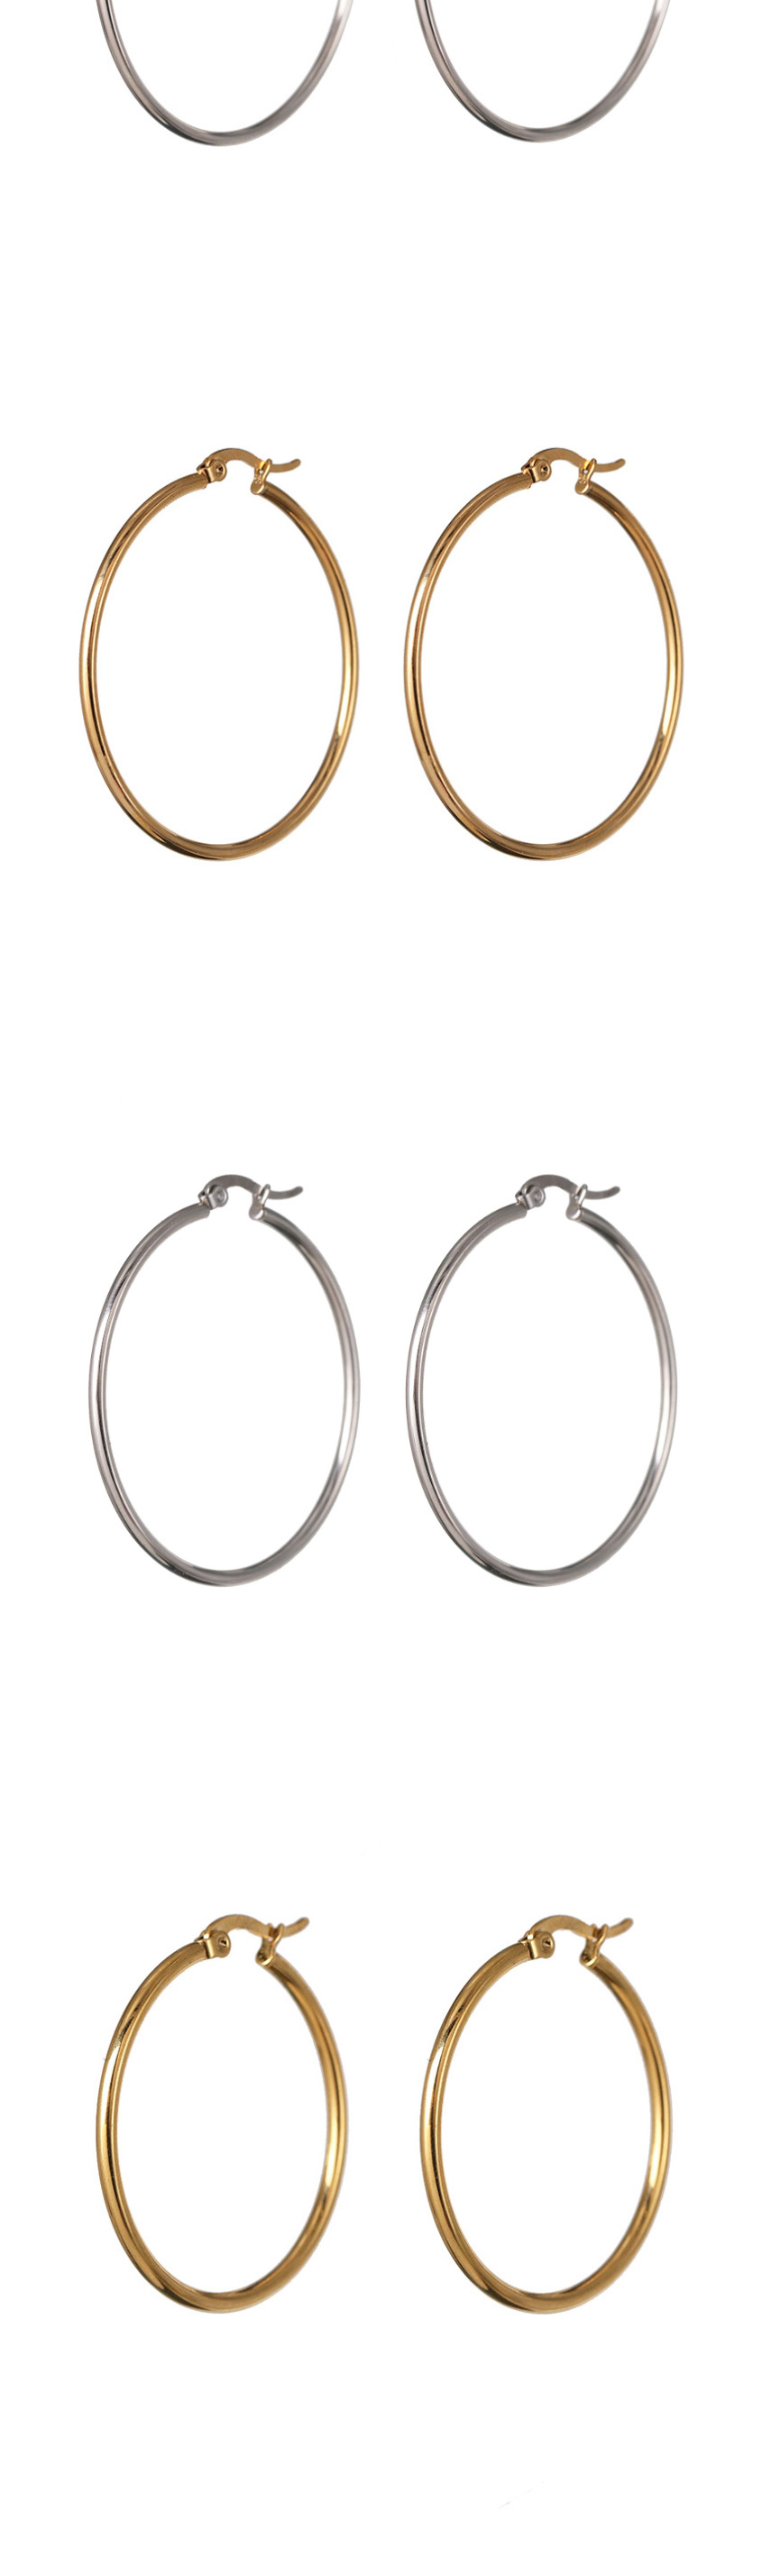 Fashion 7cm Silver Circle Earrings,Hoop Earrings